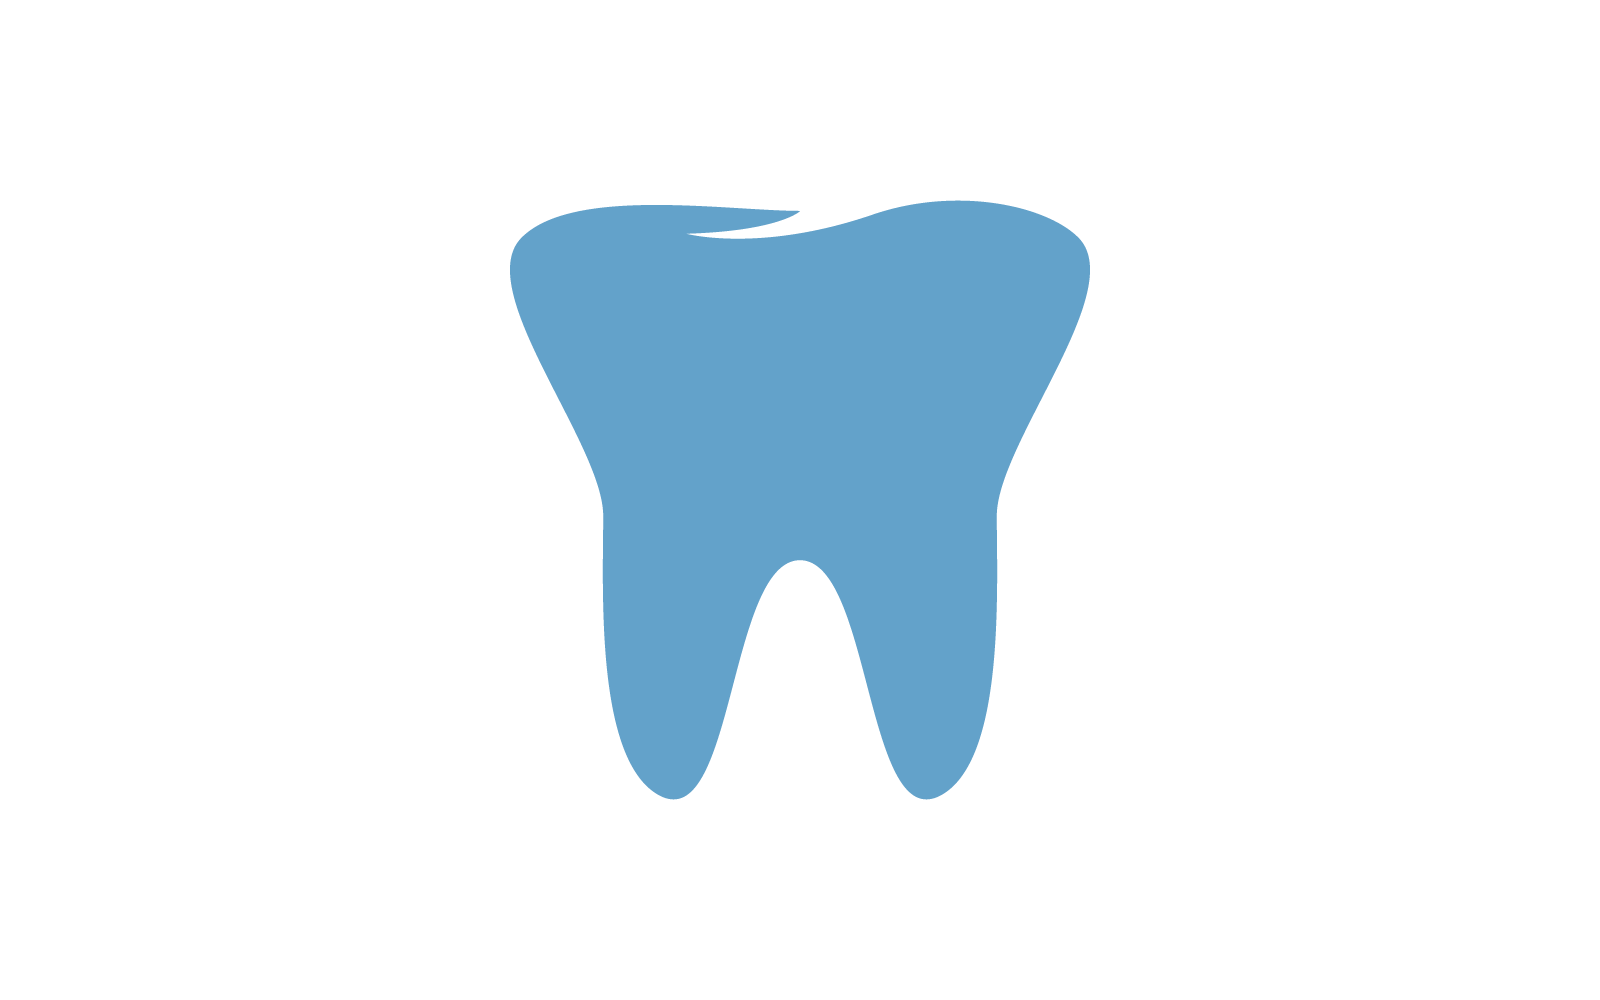 Dental logo vector flat design